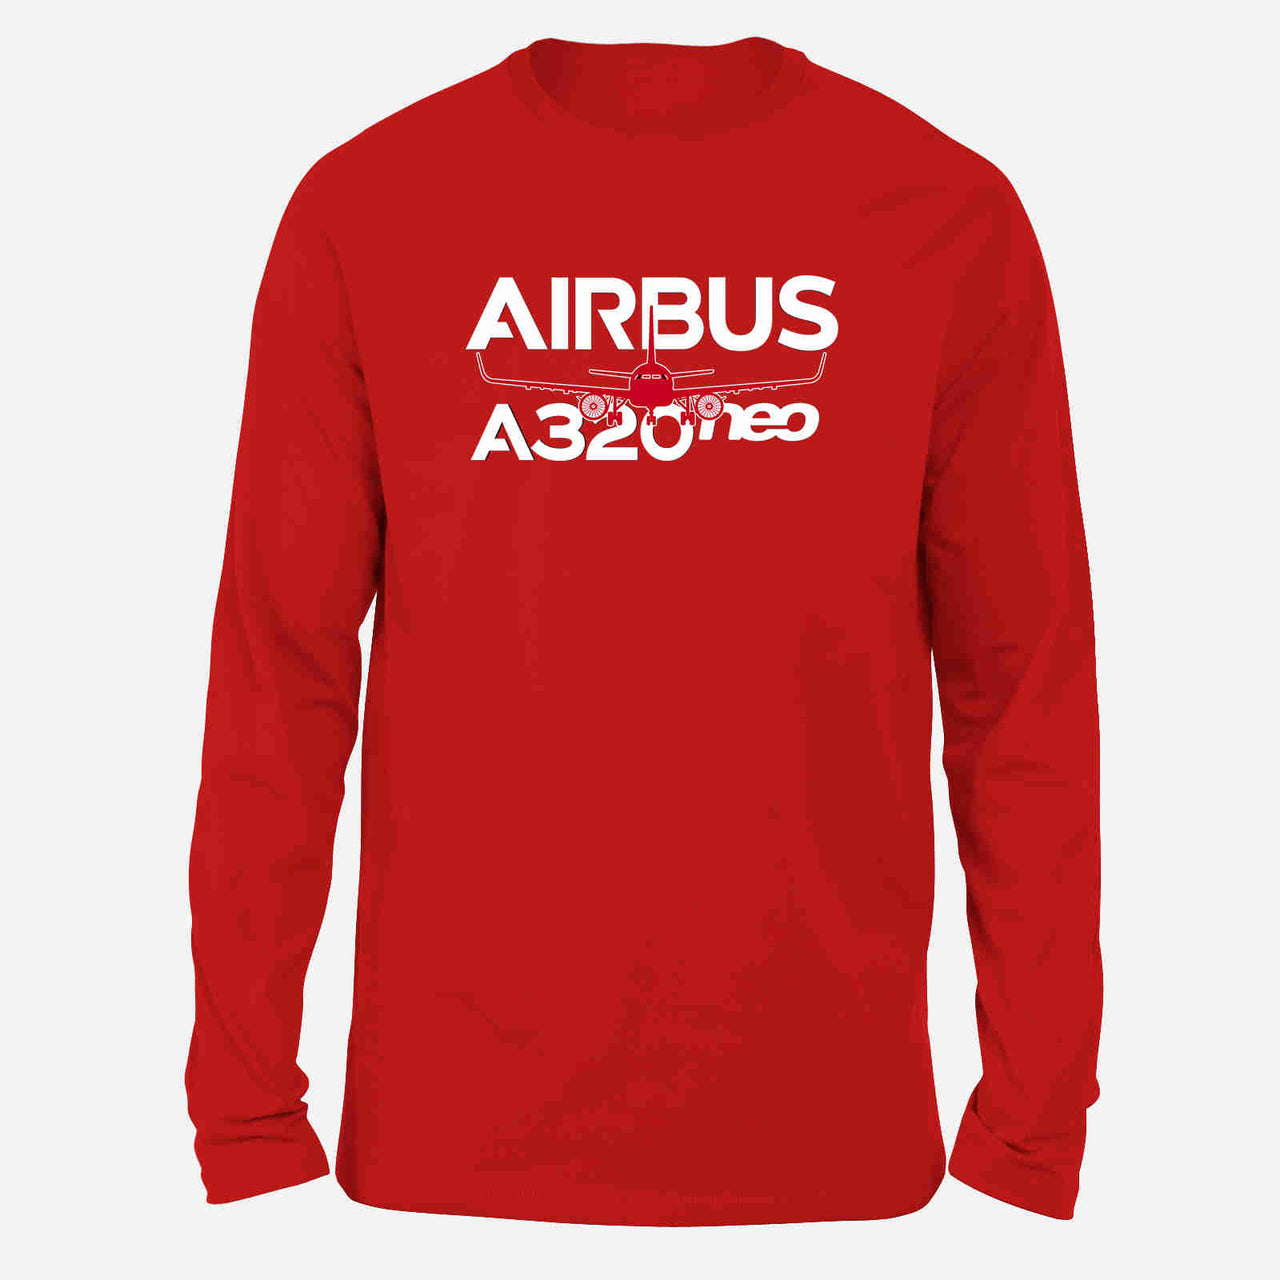 Amazing Airbus A320neo Designed Long-Sleeve T-Shirts